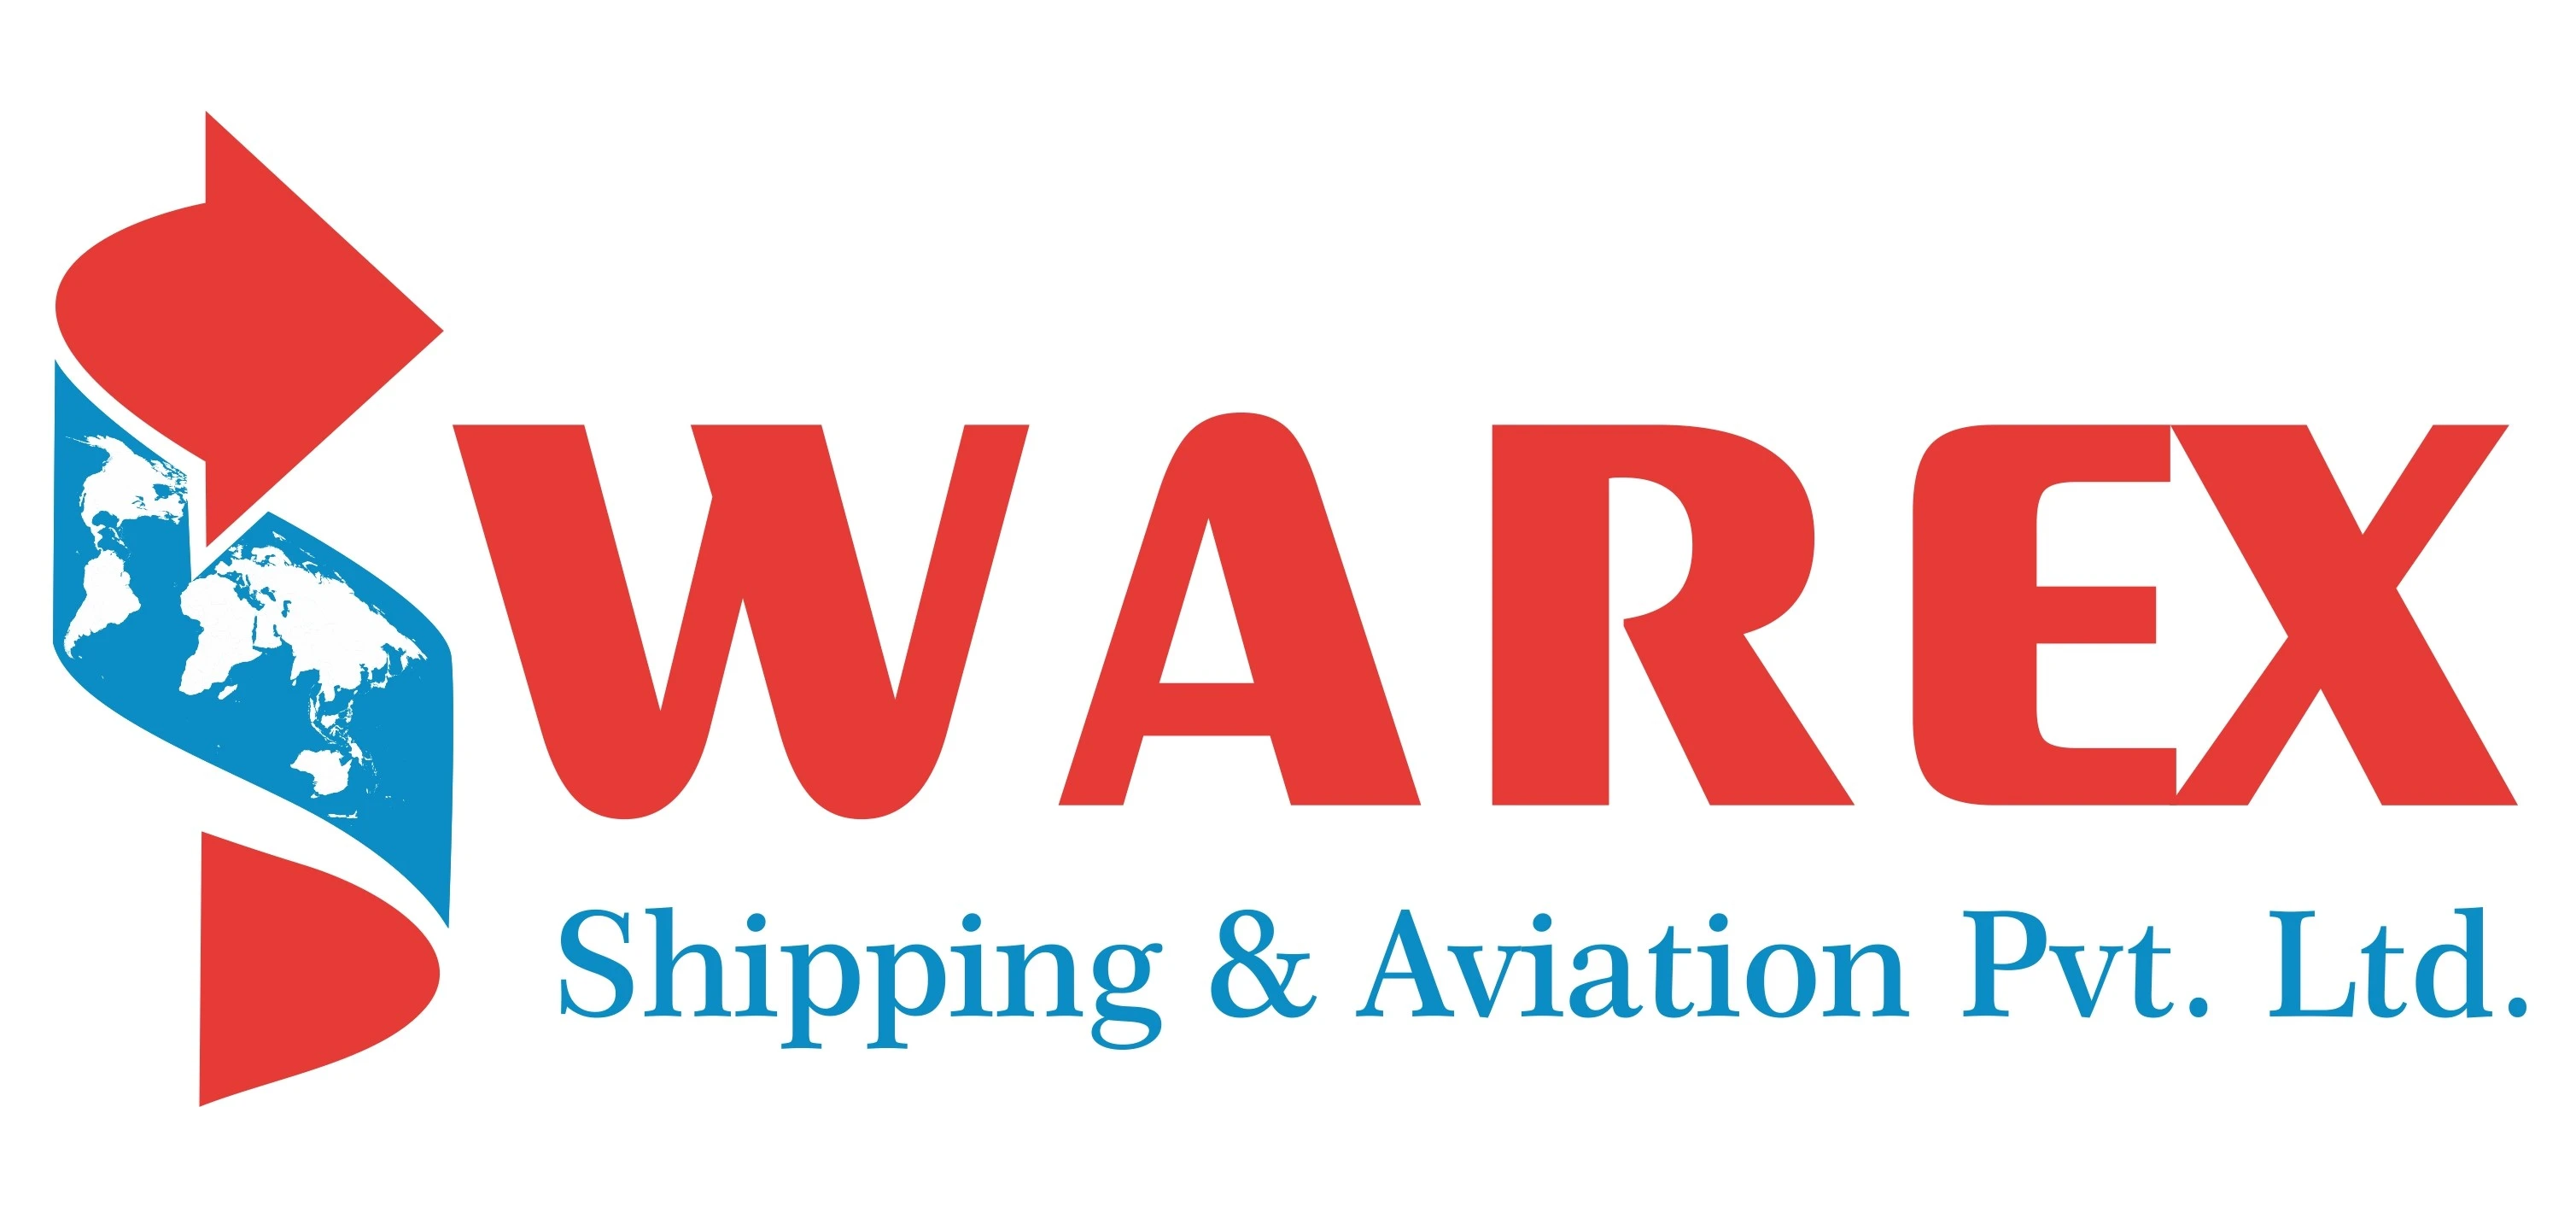 swarex shipping & aviation Pvt Ltd